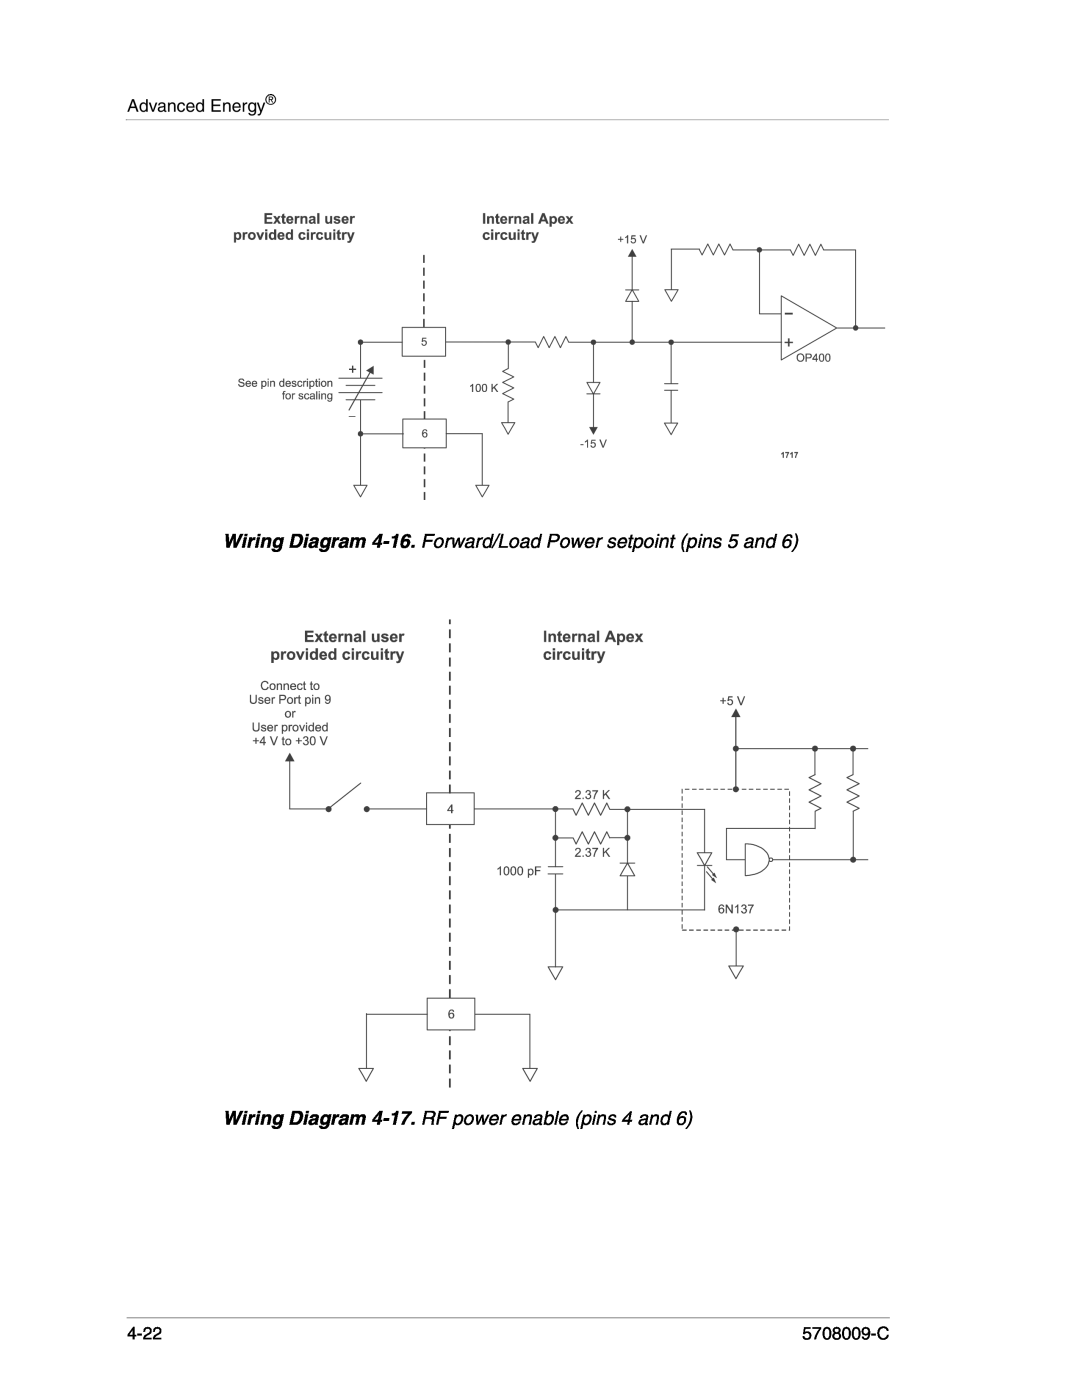 Apex Digital 5708009-C manual Wiring Diagram 4-16. Forward/Load Power setpoint pins 5 and, Advanced Energy, 4-22 